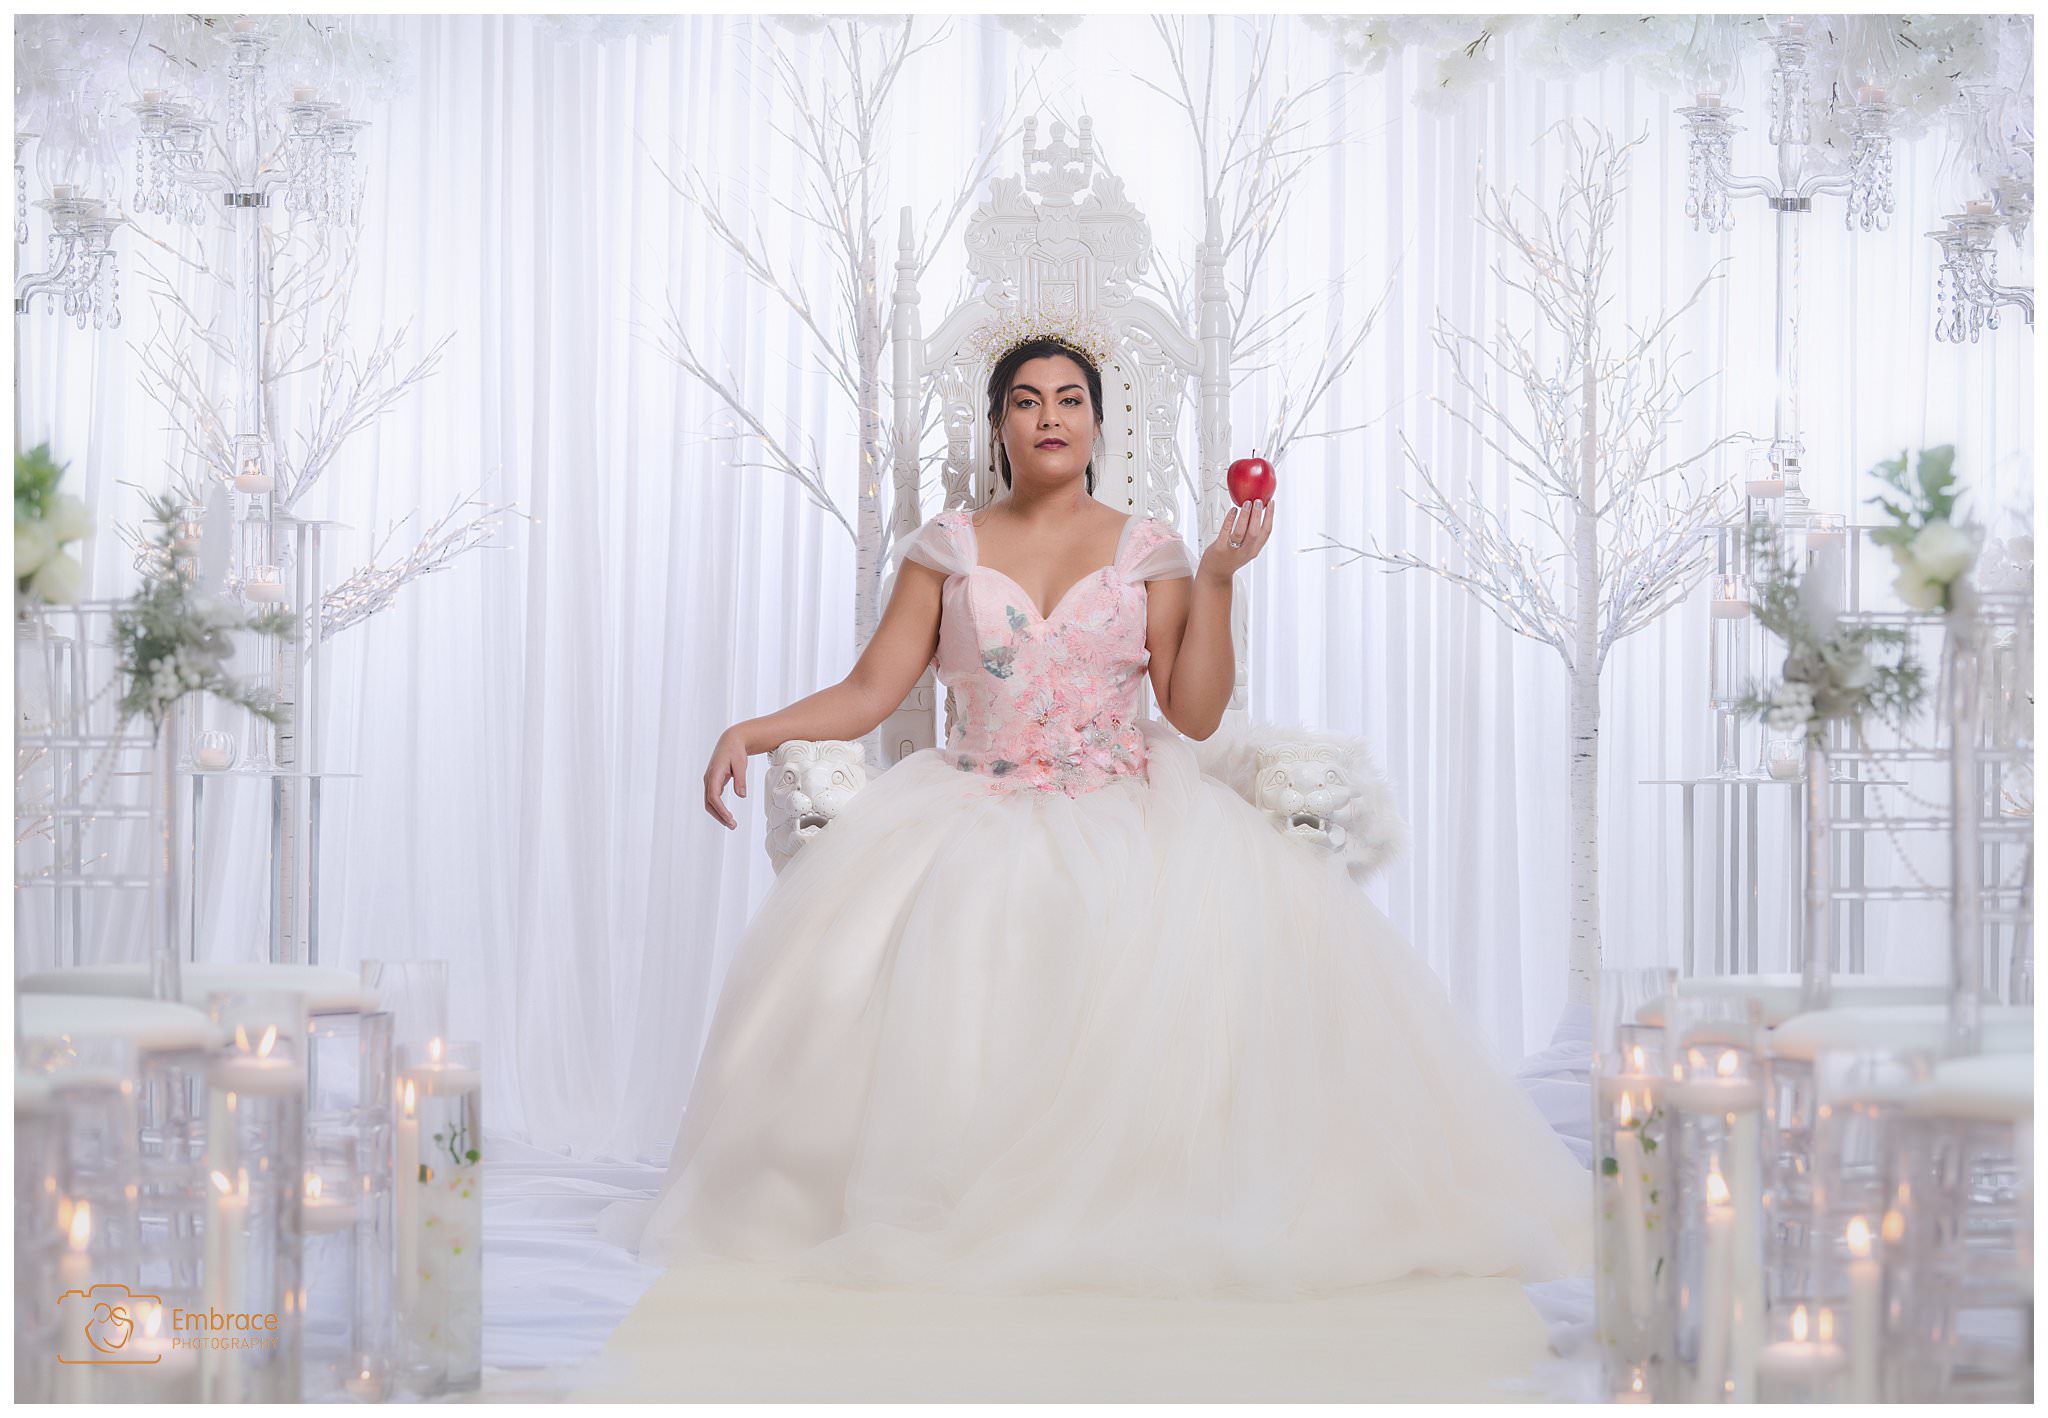 Model Bride Melissa Porter holding apple for fairytale wedding photo shoot